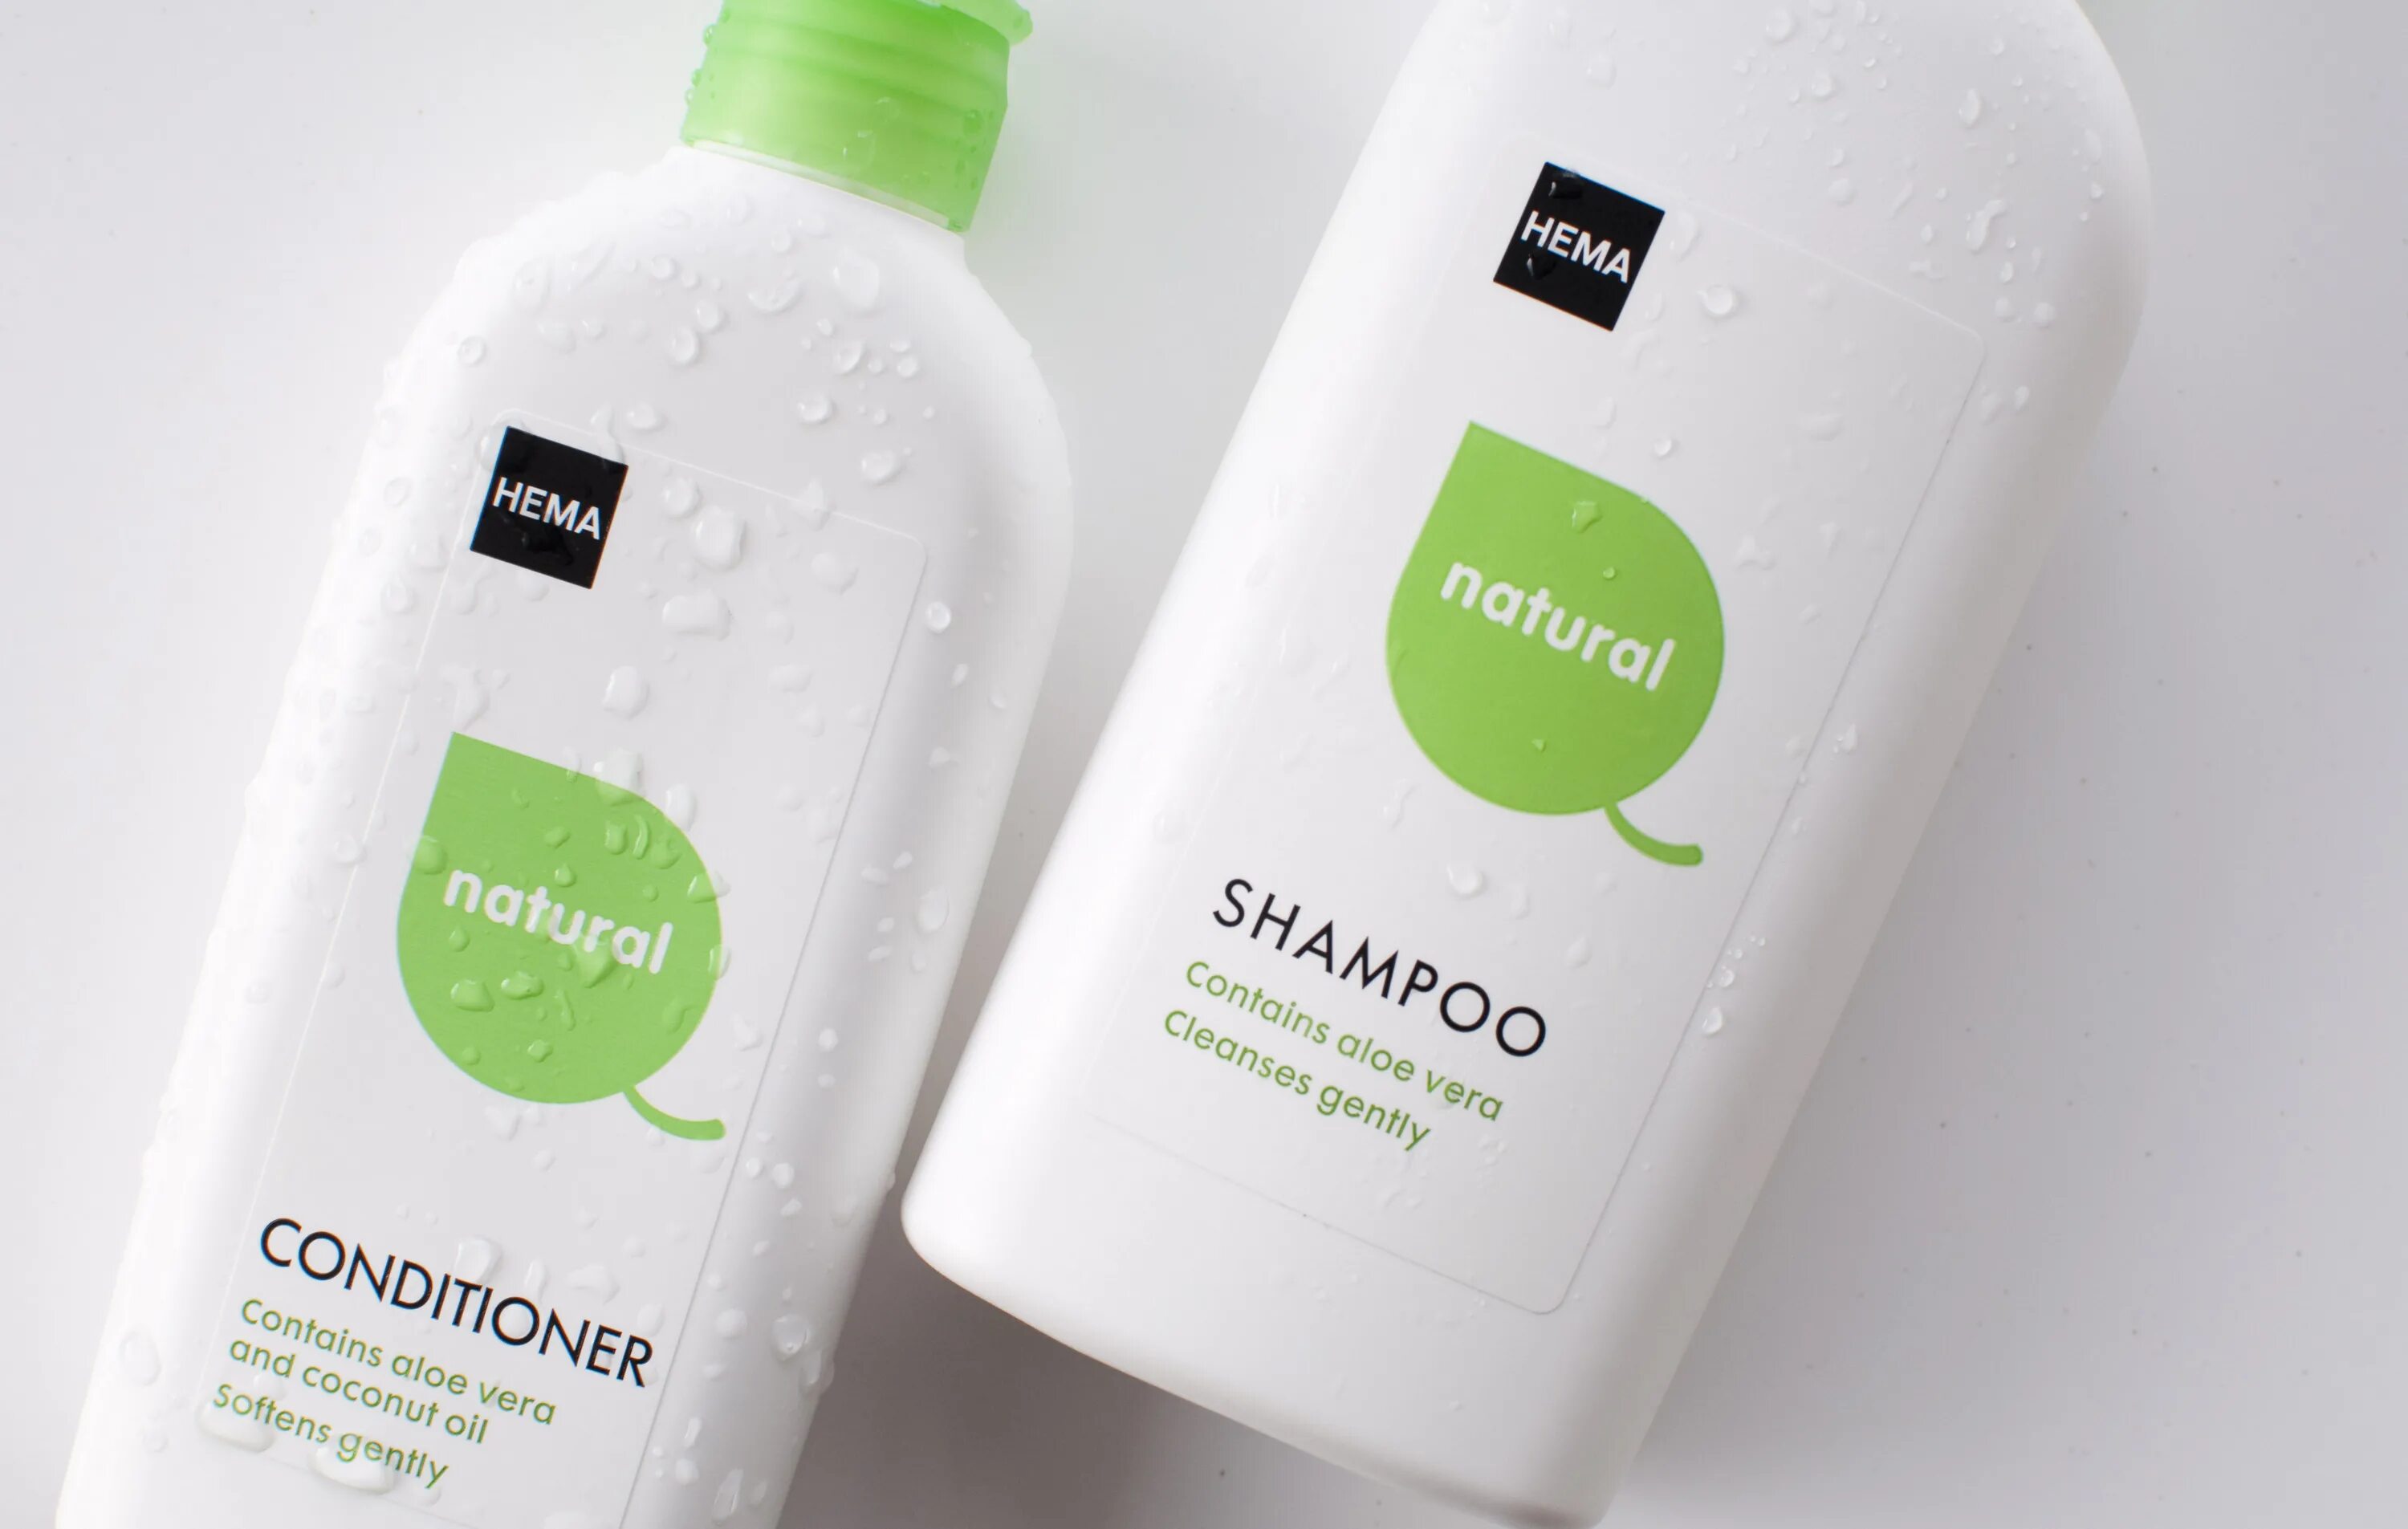 Natural shampoo. Conditioner Shampoo Italy. Rapm Conditioner Shampoo. Shampoo Dubai.